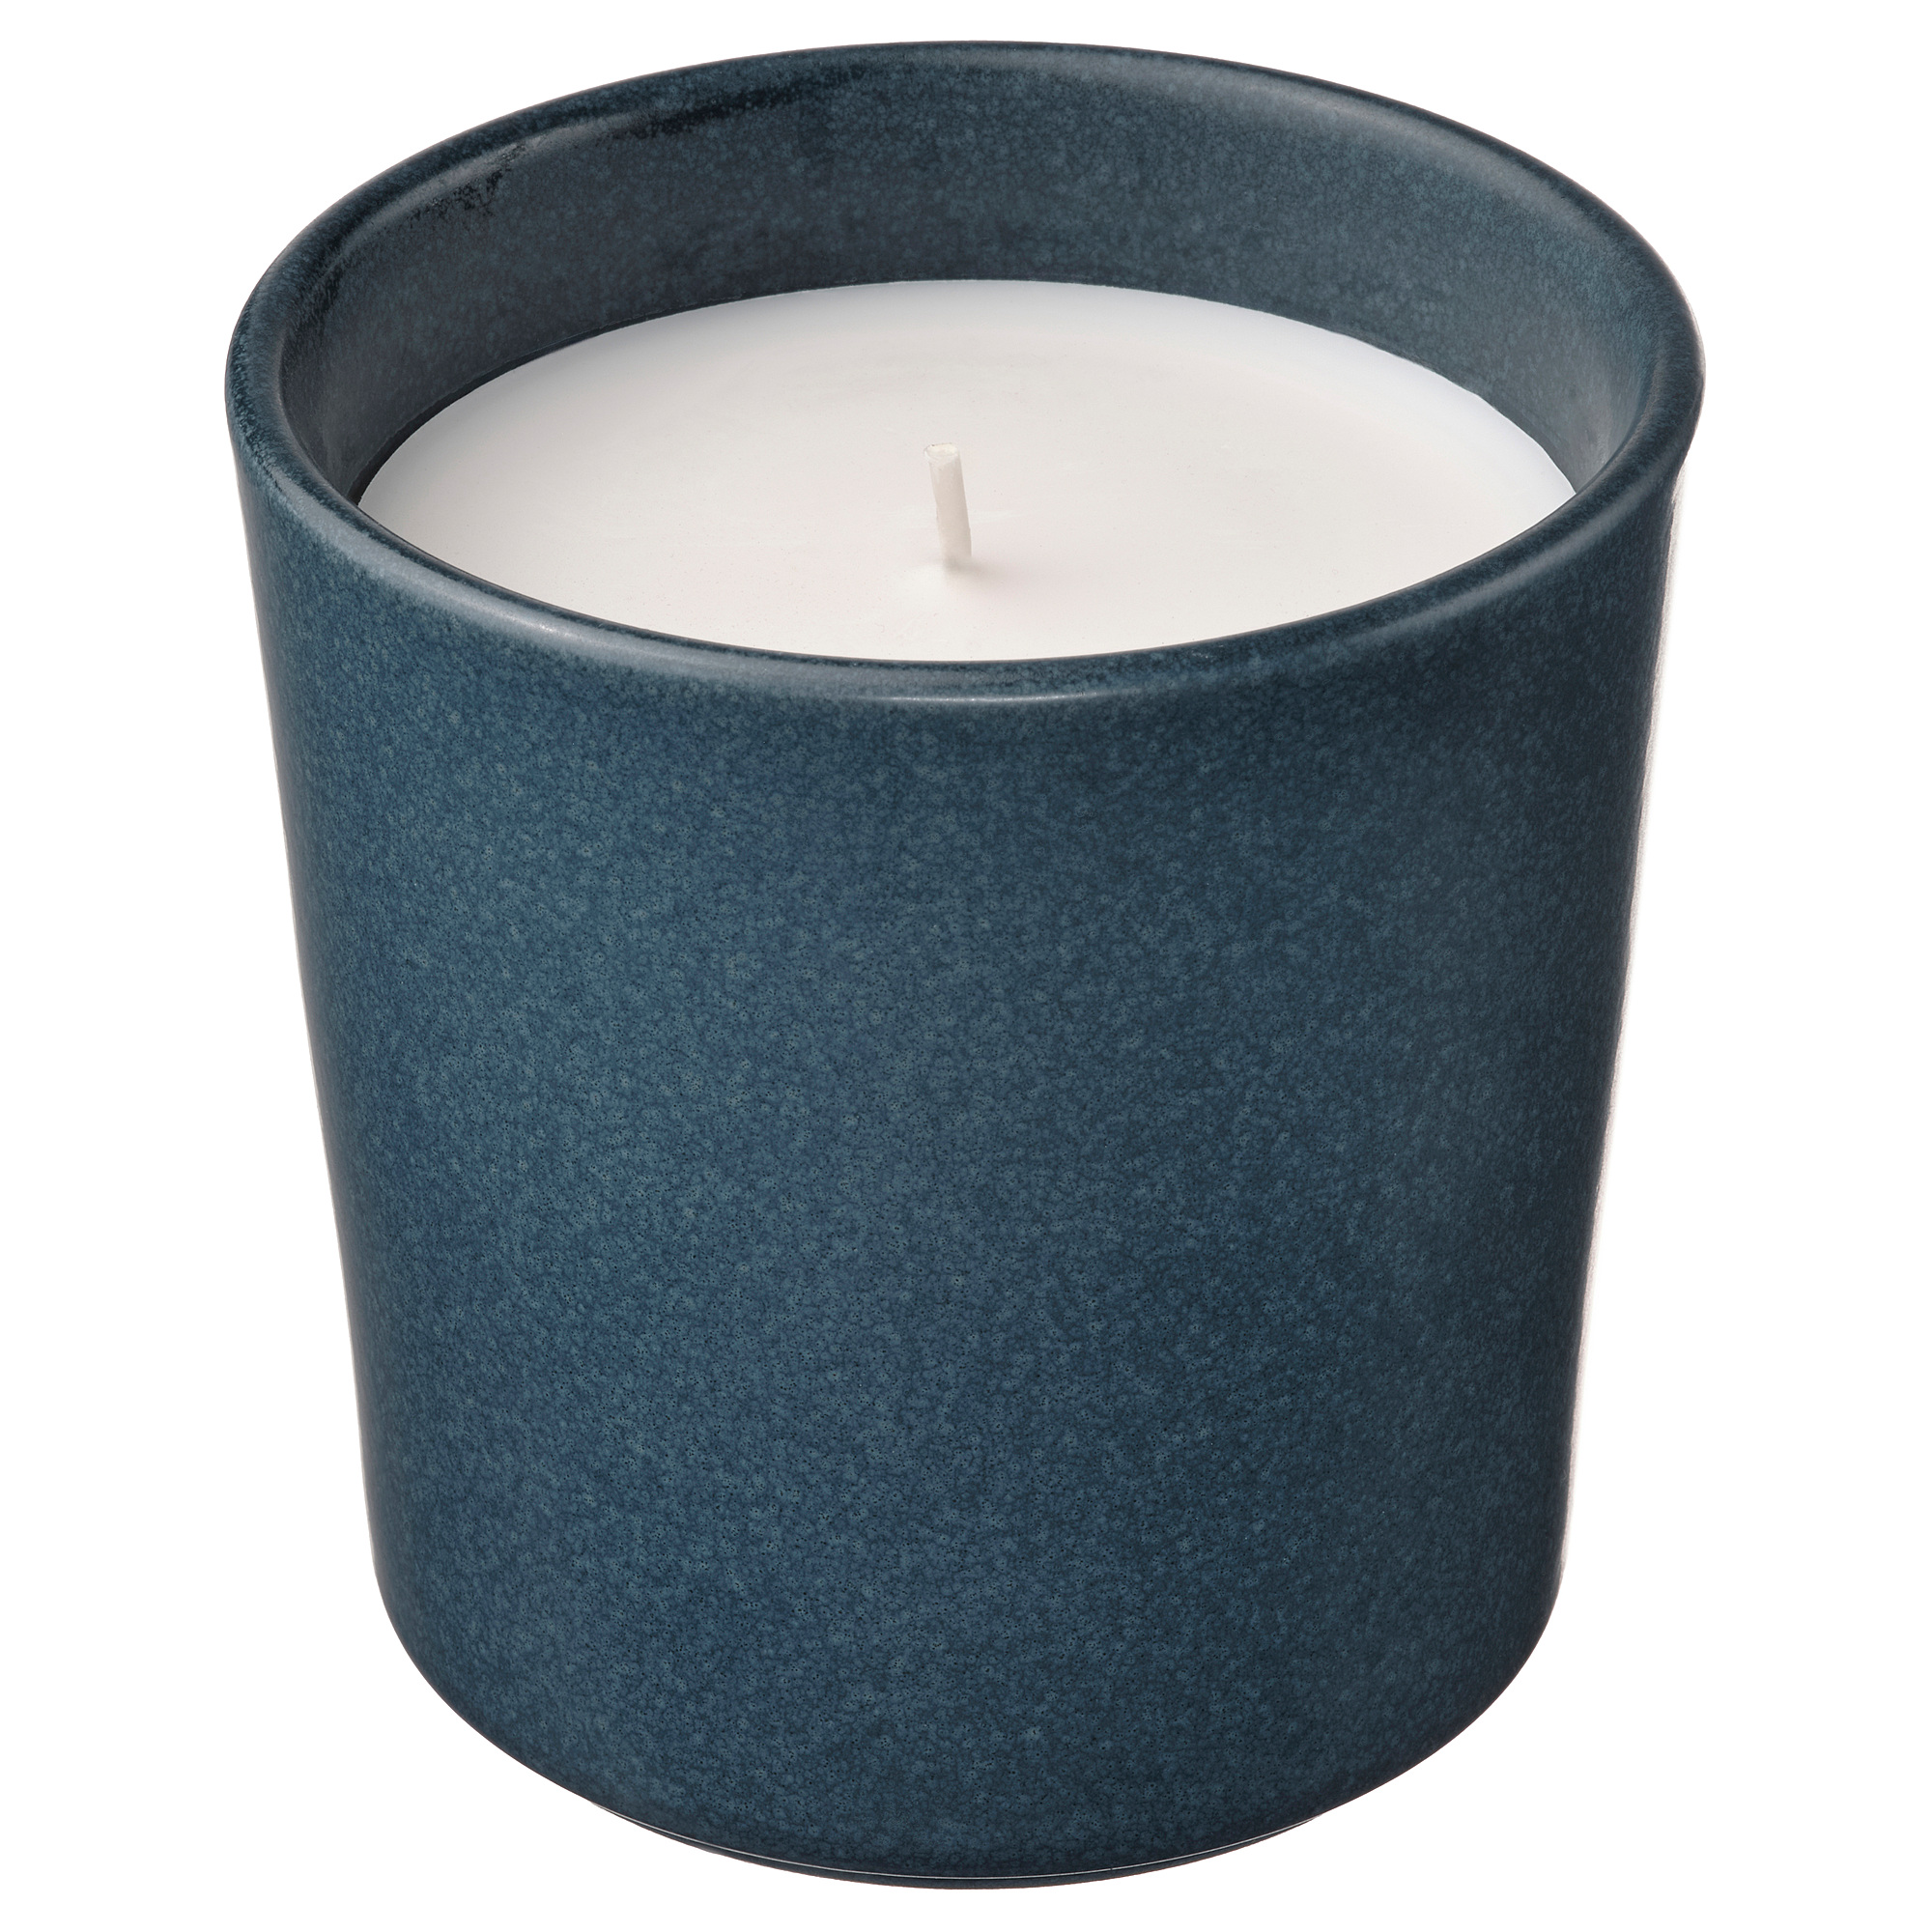 FRUKTSKOG scented candle in ceramic jar